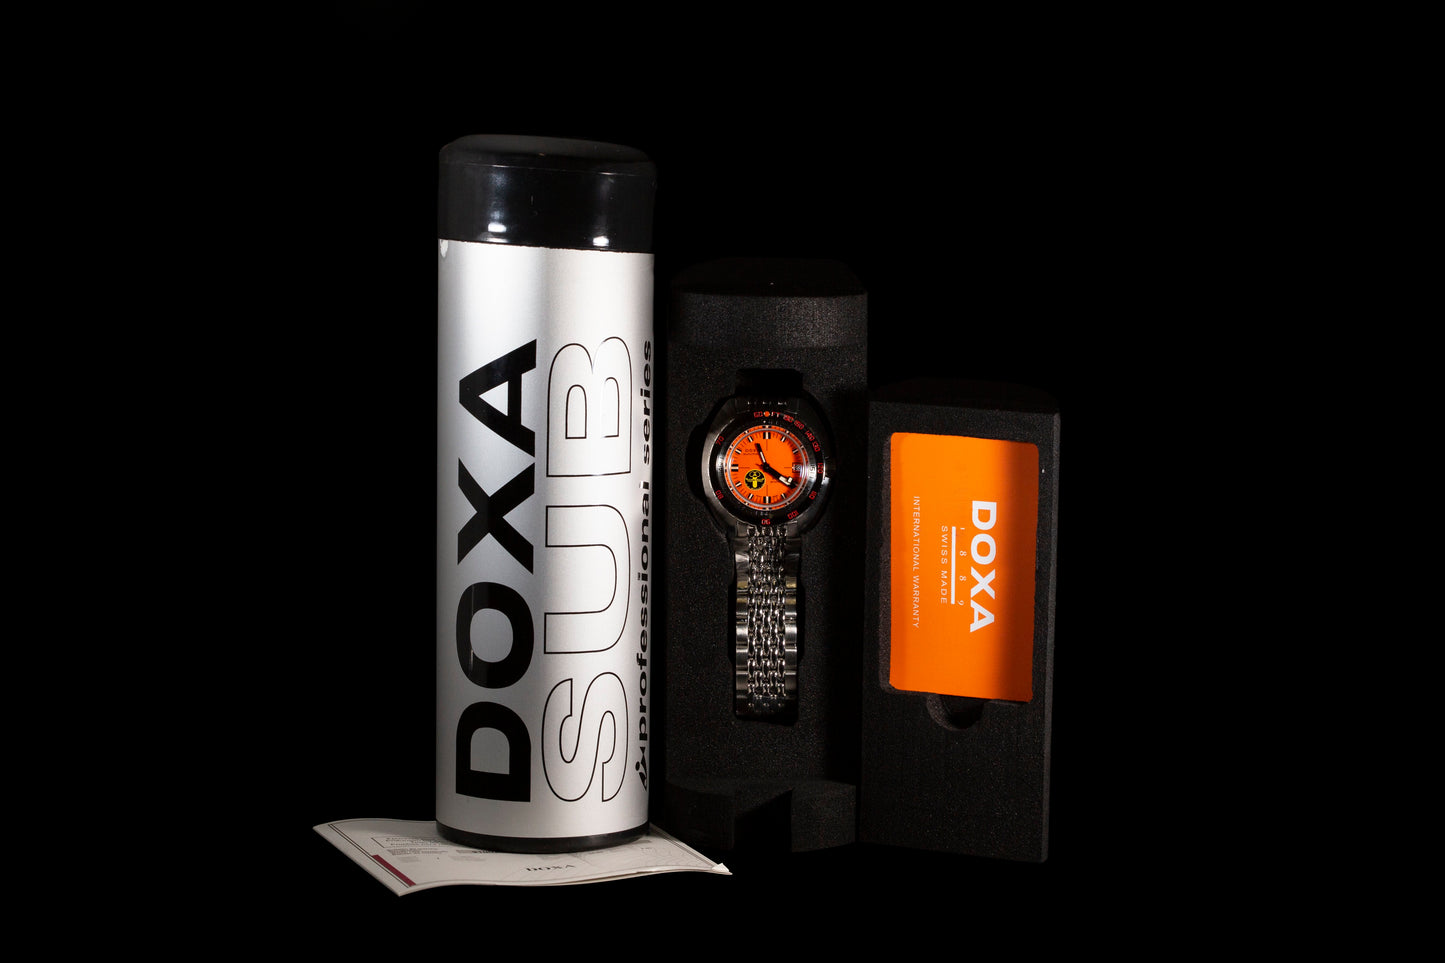 DOXA Sub 300 "Black Lung" Limited Edition